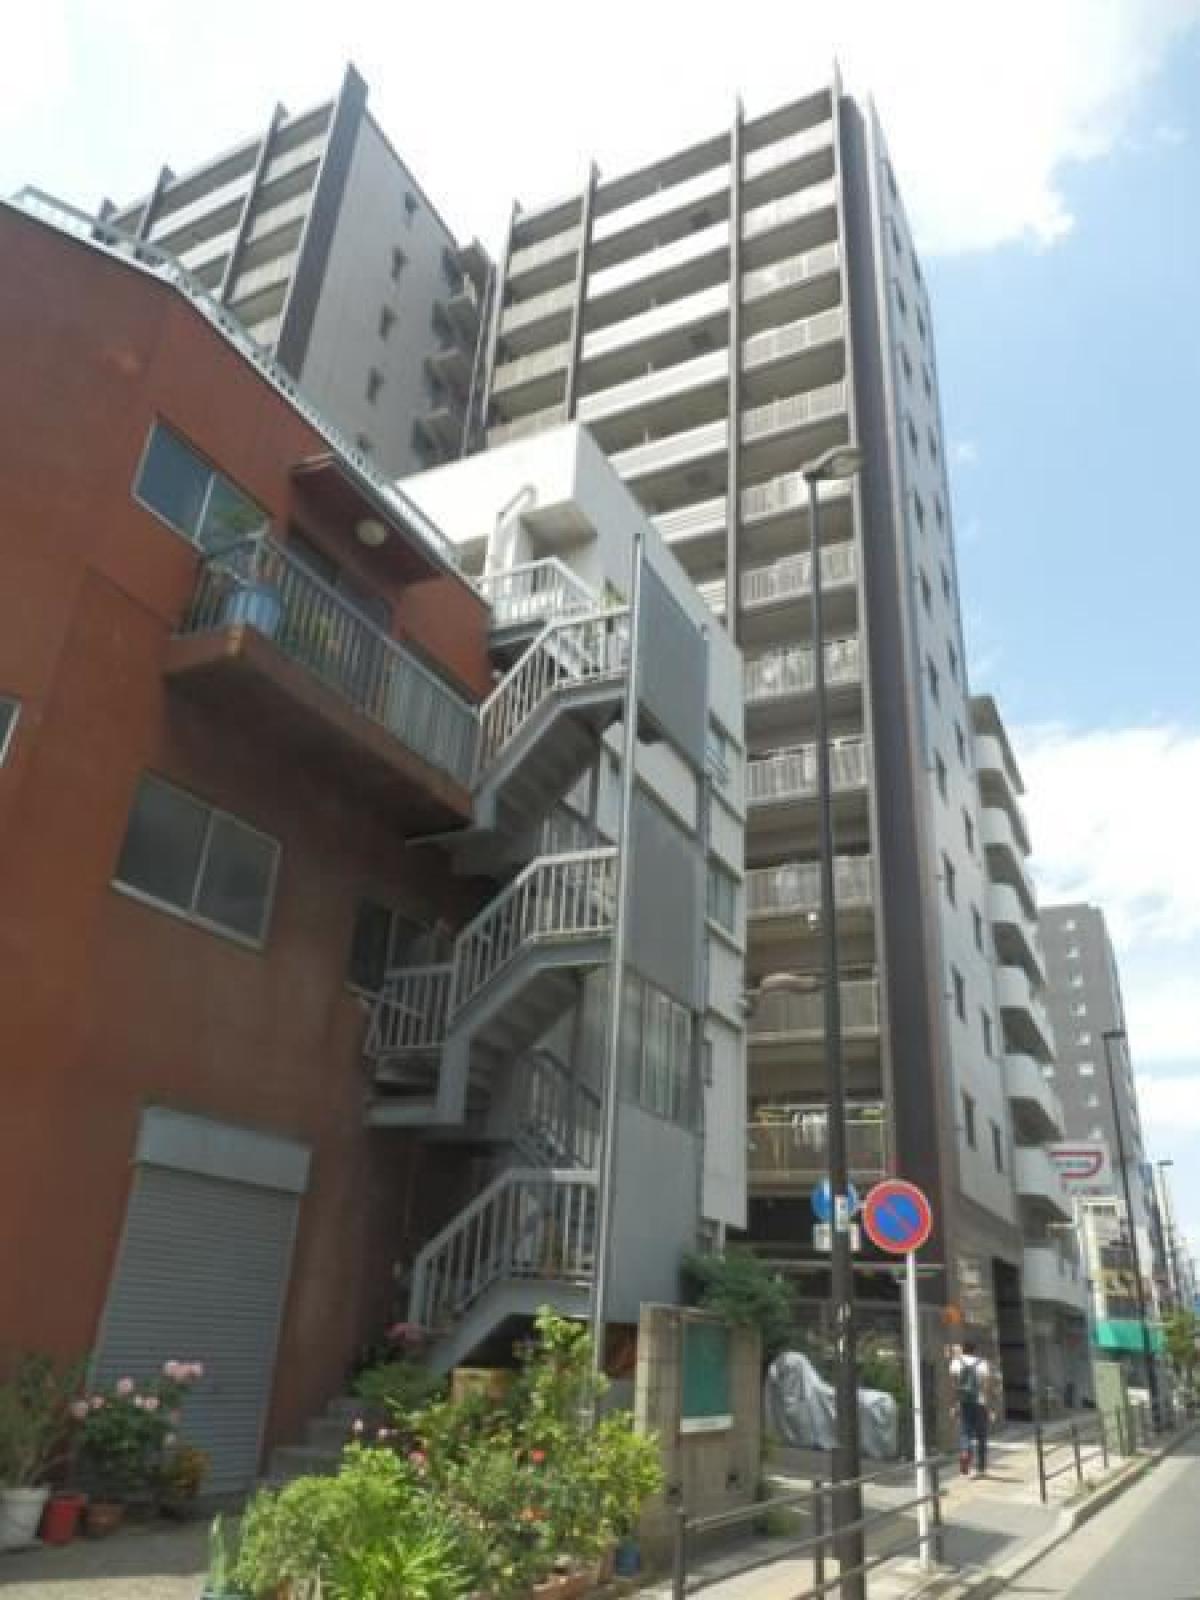 Picture of Apartment For Sale in Arakawa Ku, Tokyo, Japan